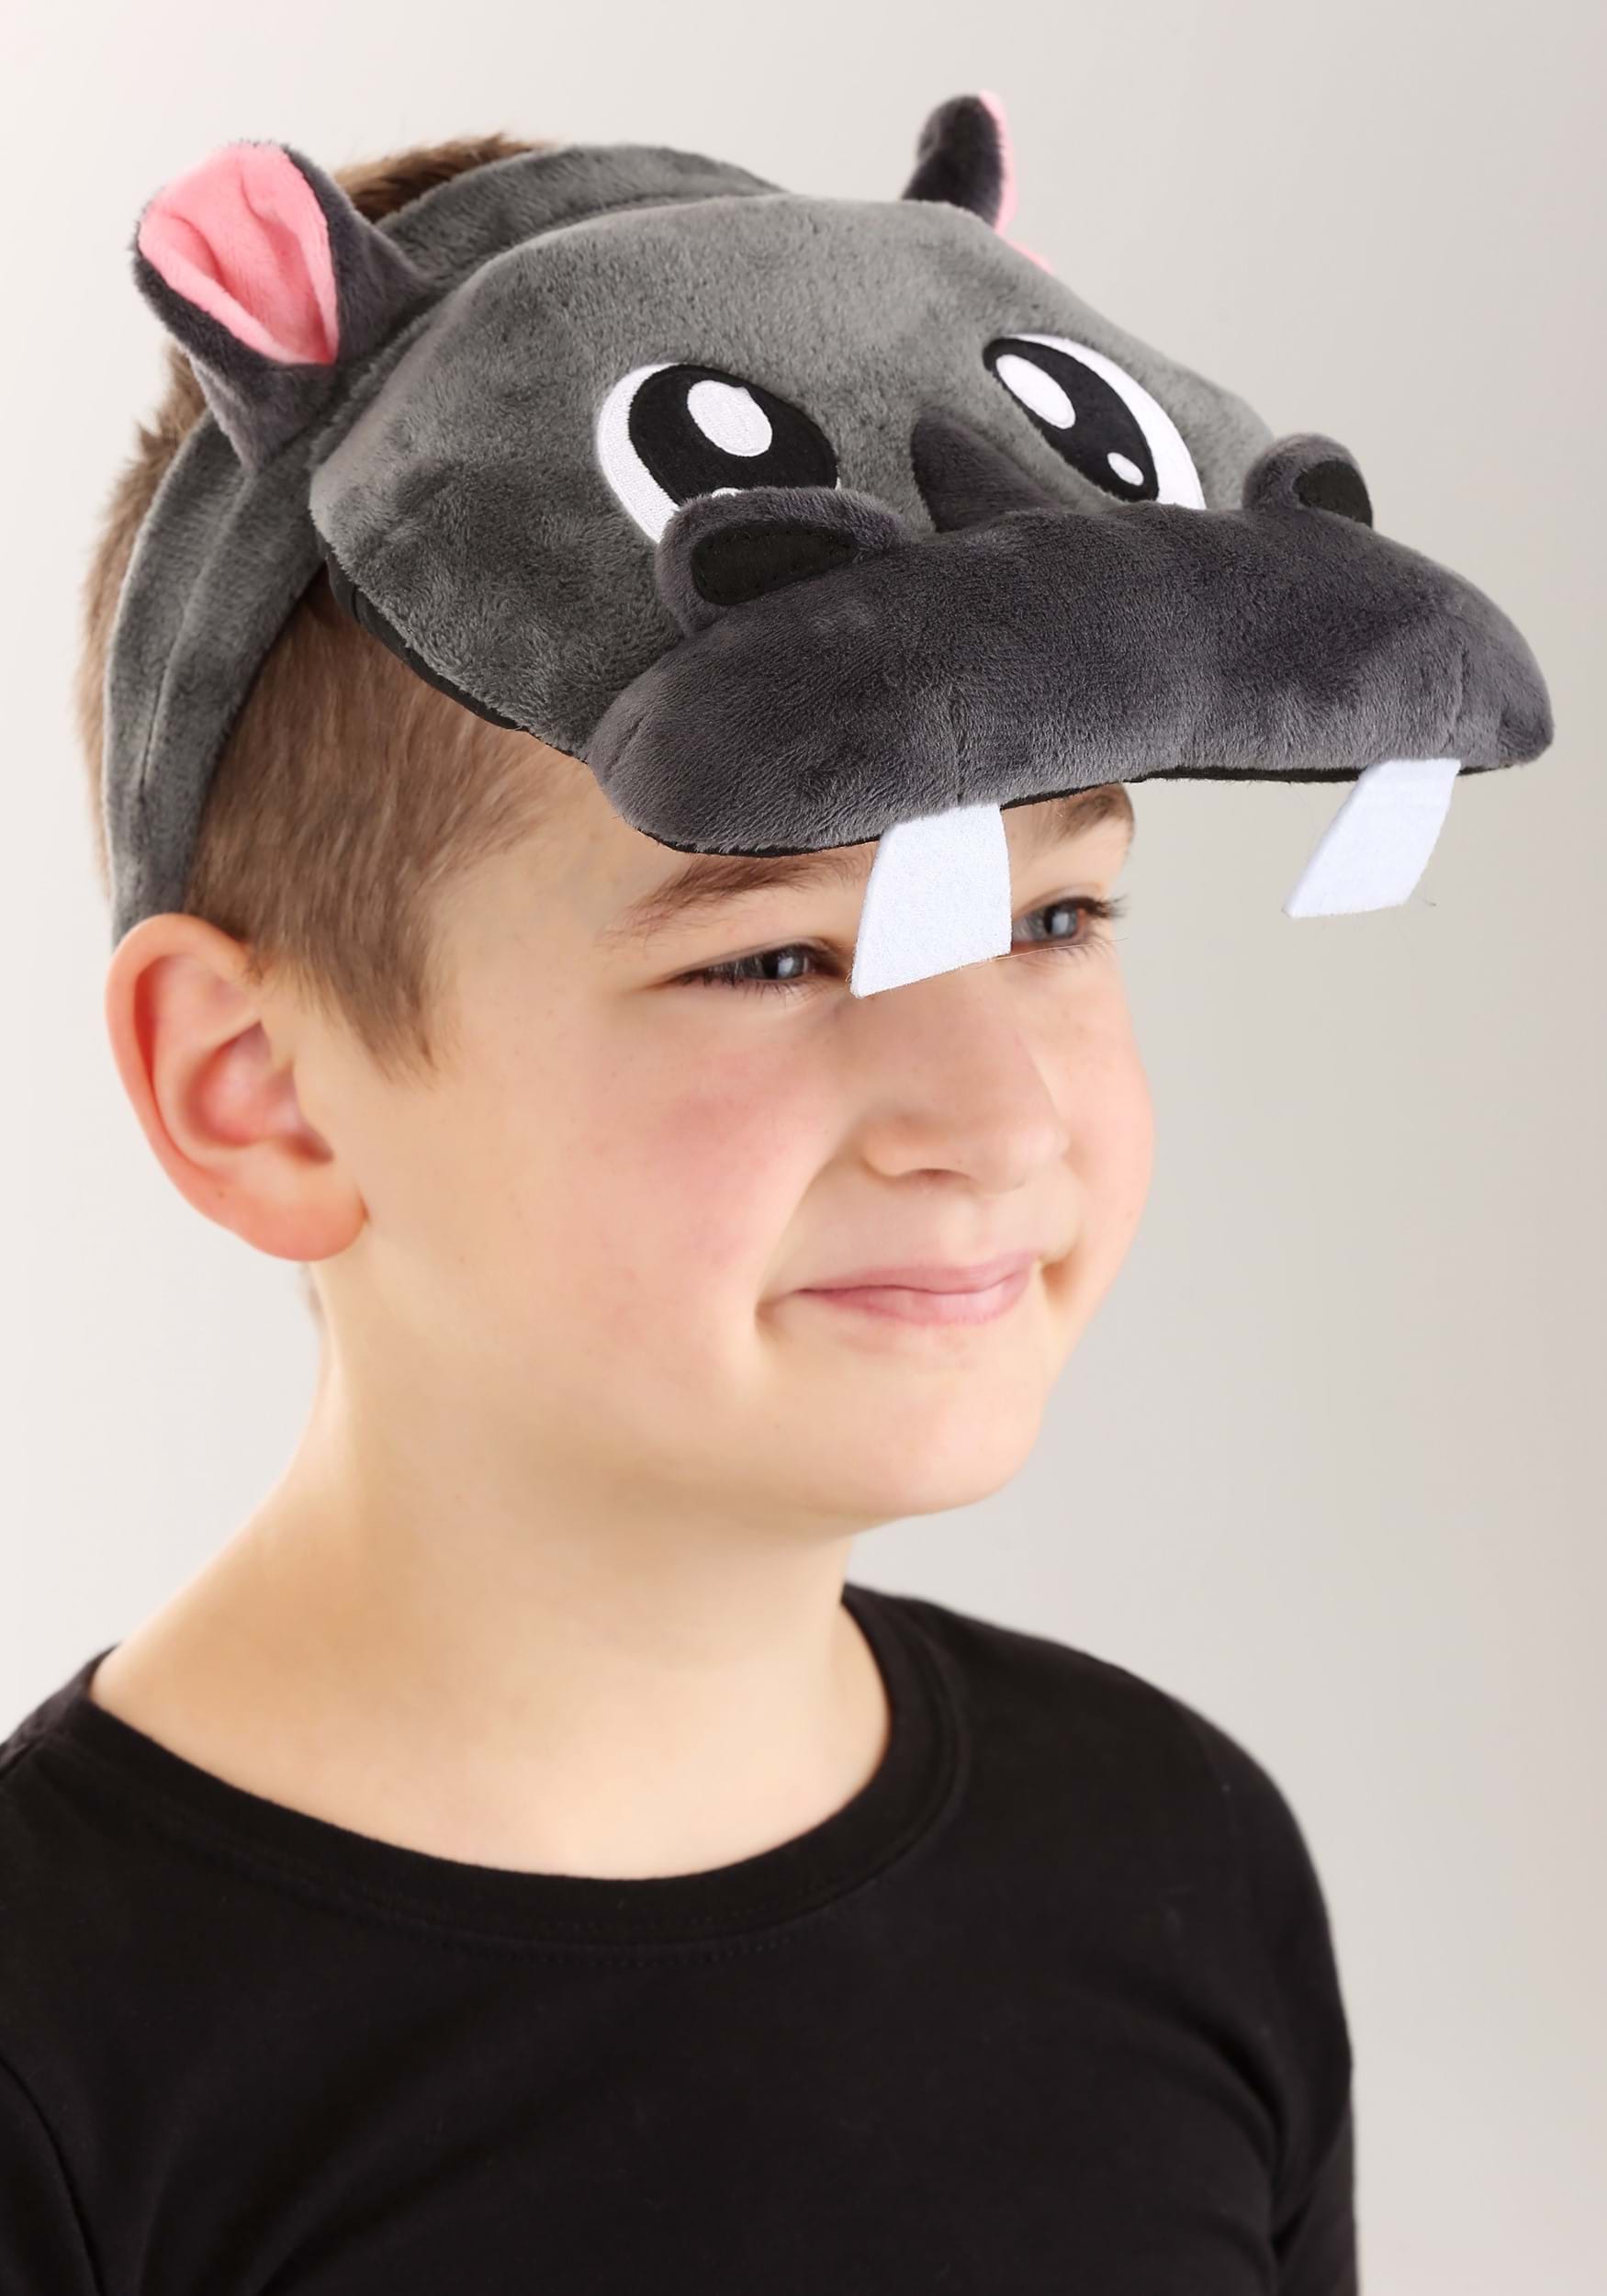 Hippo Plush Headband Costume